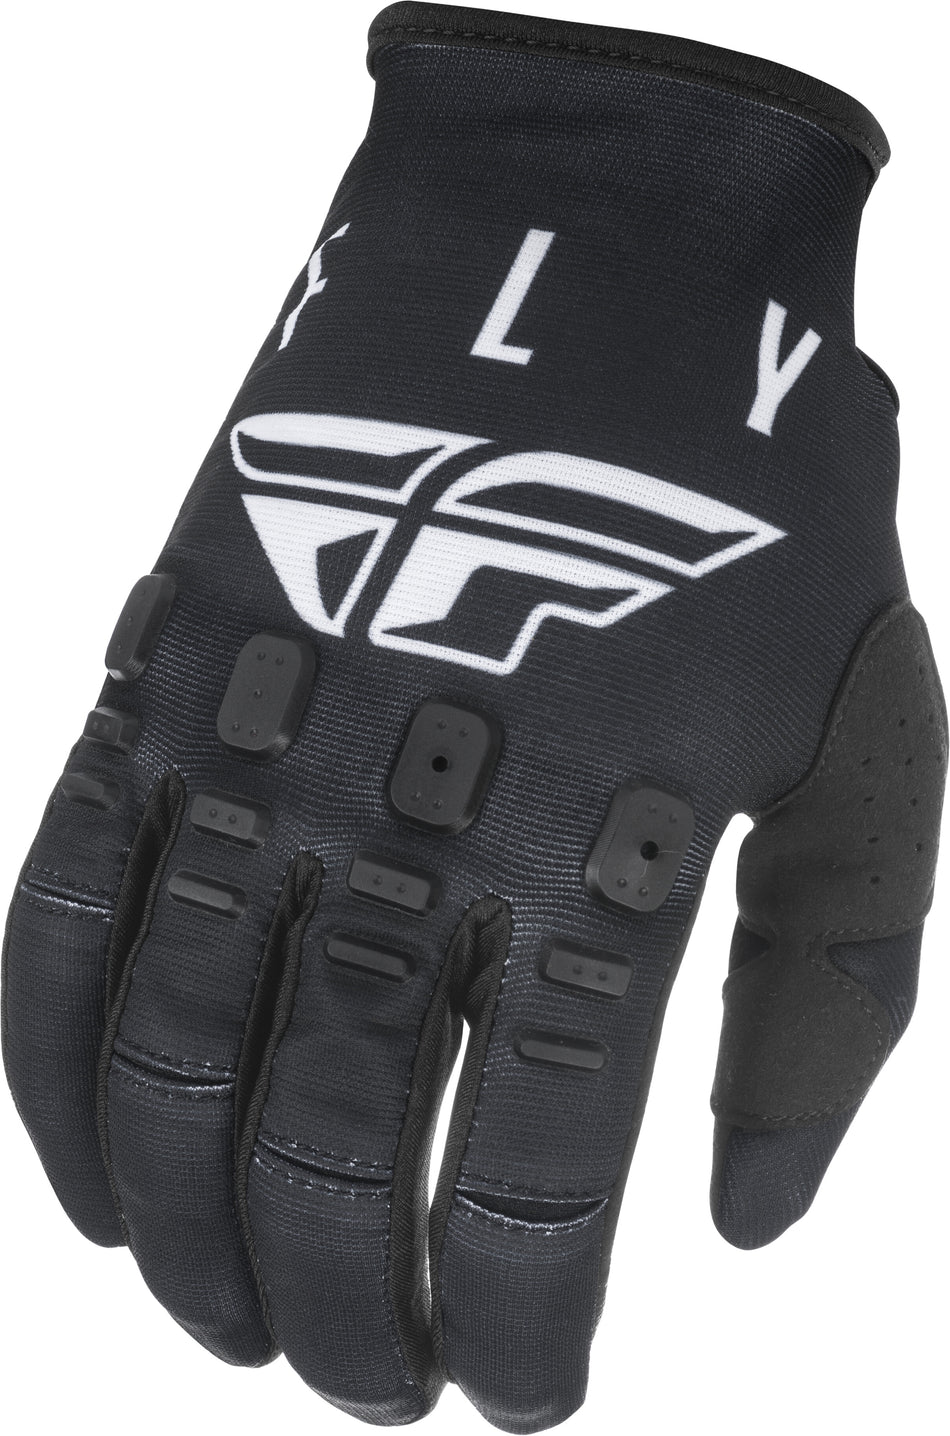 FLY RACING Kinetic K121 Gloves Black/White Sz 11 374-41011